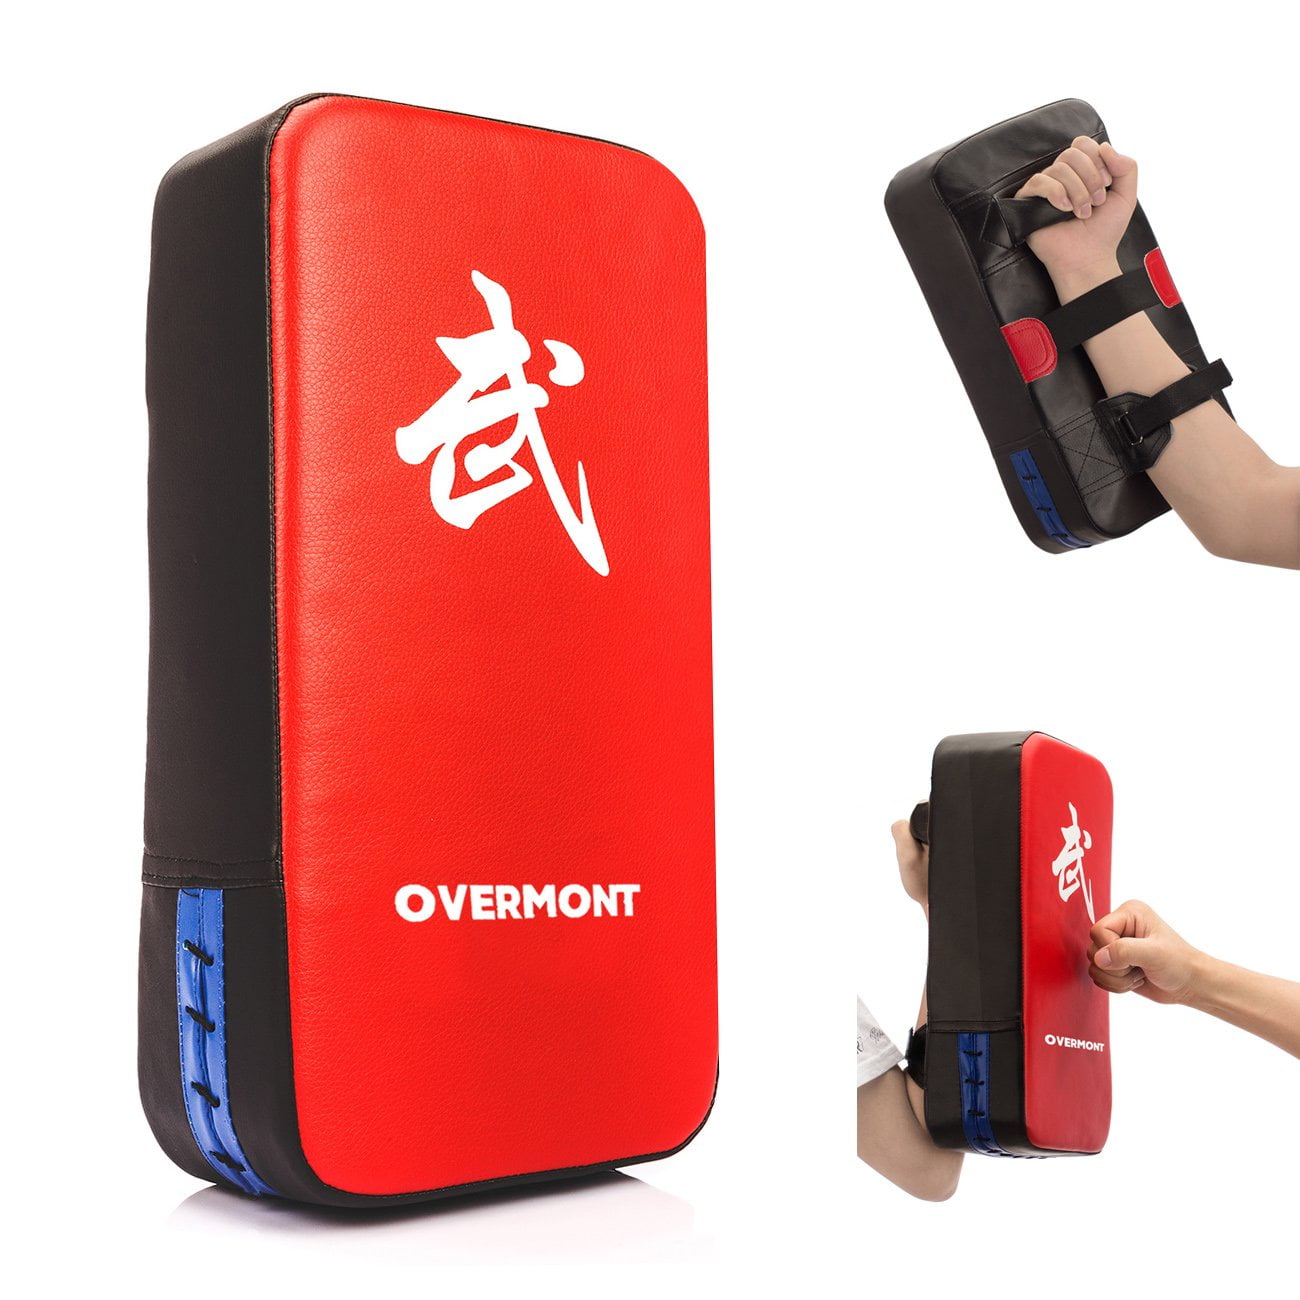 Overmont Taekwondo Kick Pads Boxing Karate Pad PU Leather Muay Thai MMA Martial Art Kickboxing Punch Mitts Punching Bag Kicking Shield Training 